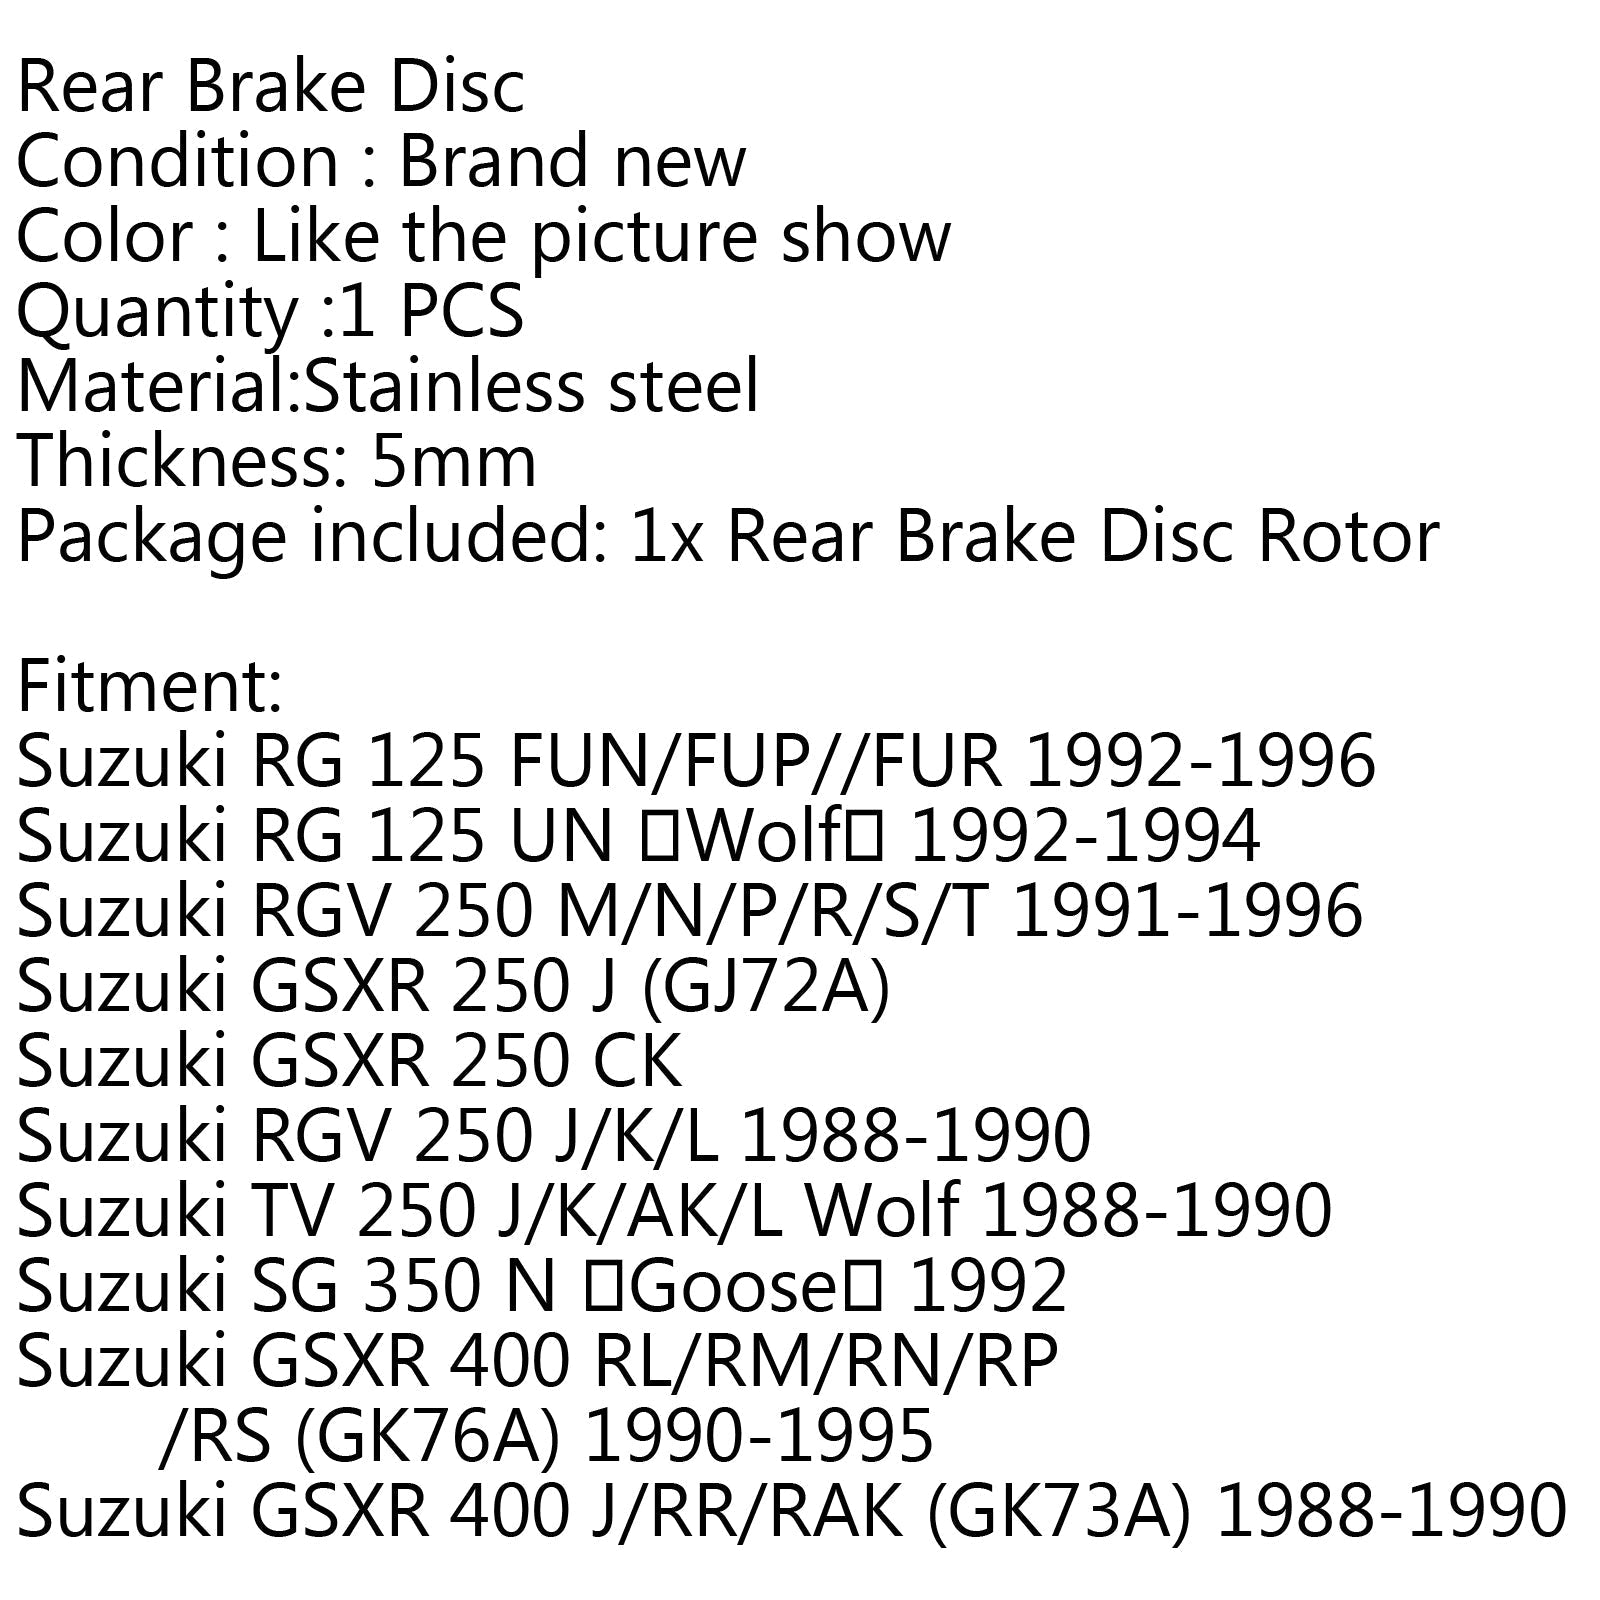 Rotor de disco de freno trasero para Suzuki RGV 250 M/N/P/R/S/T Suzuki GSXR 250 J CK 400 Genérico